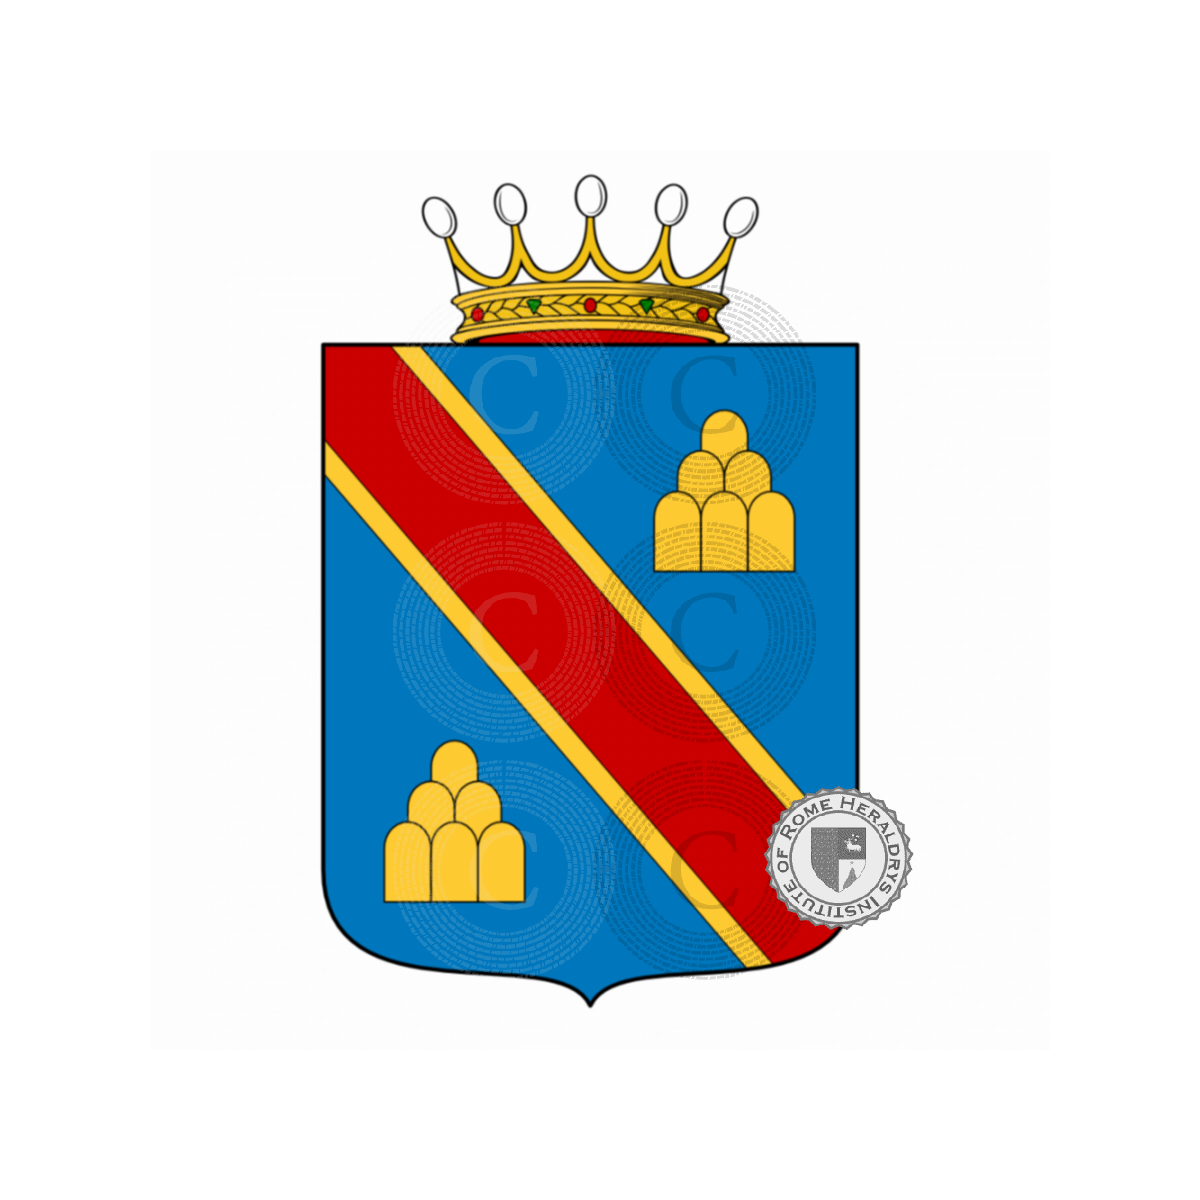 Coat of arms of familyCresci